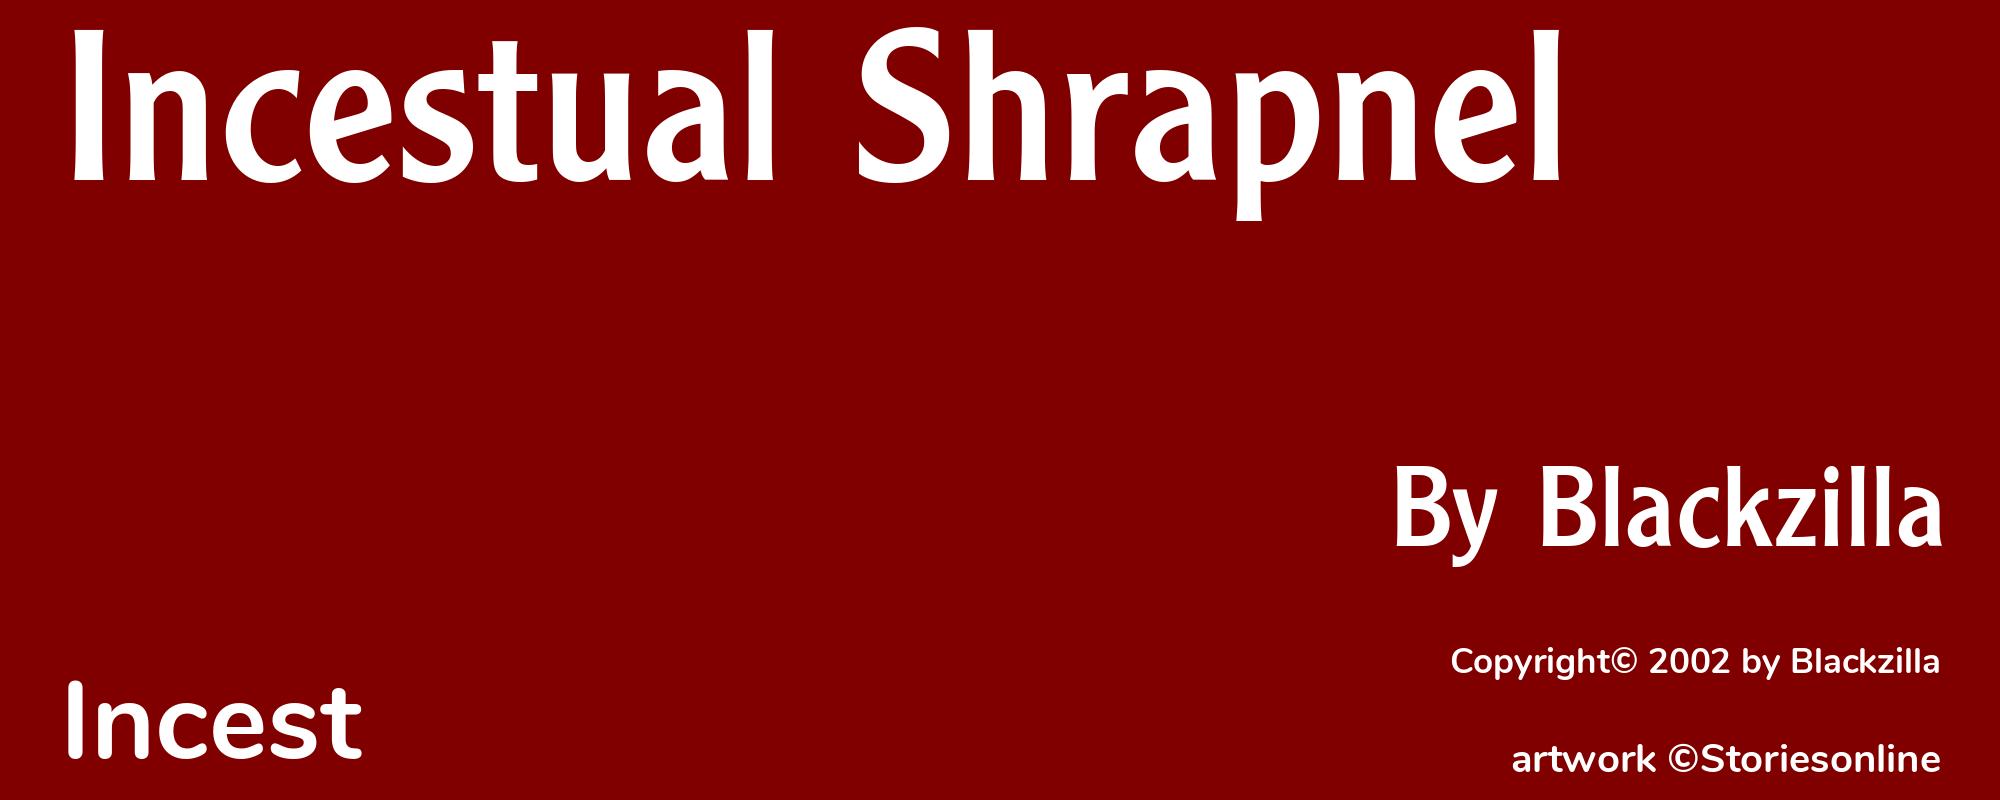 Incestual Shrapnel - Cover